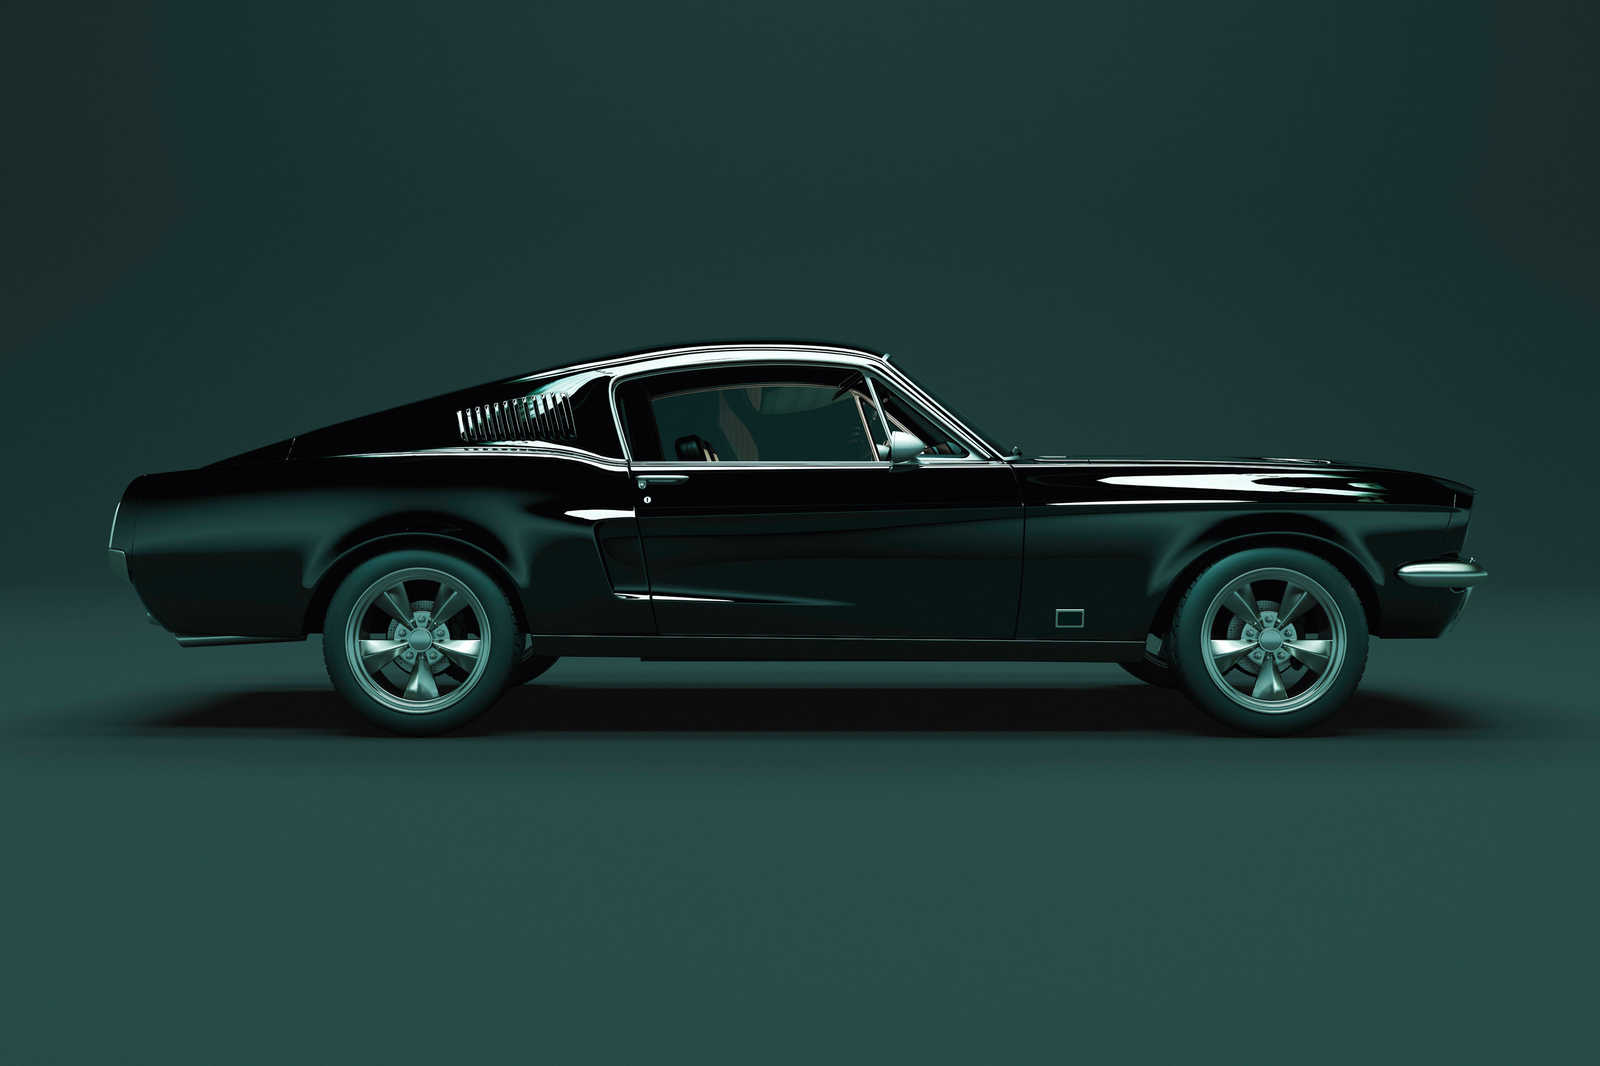             Mustang 1 - Cuadro en lienzo, vista lateral Mustang, vintage - 0,90 m x 0,60 m
        